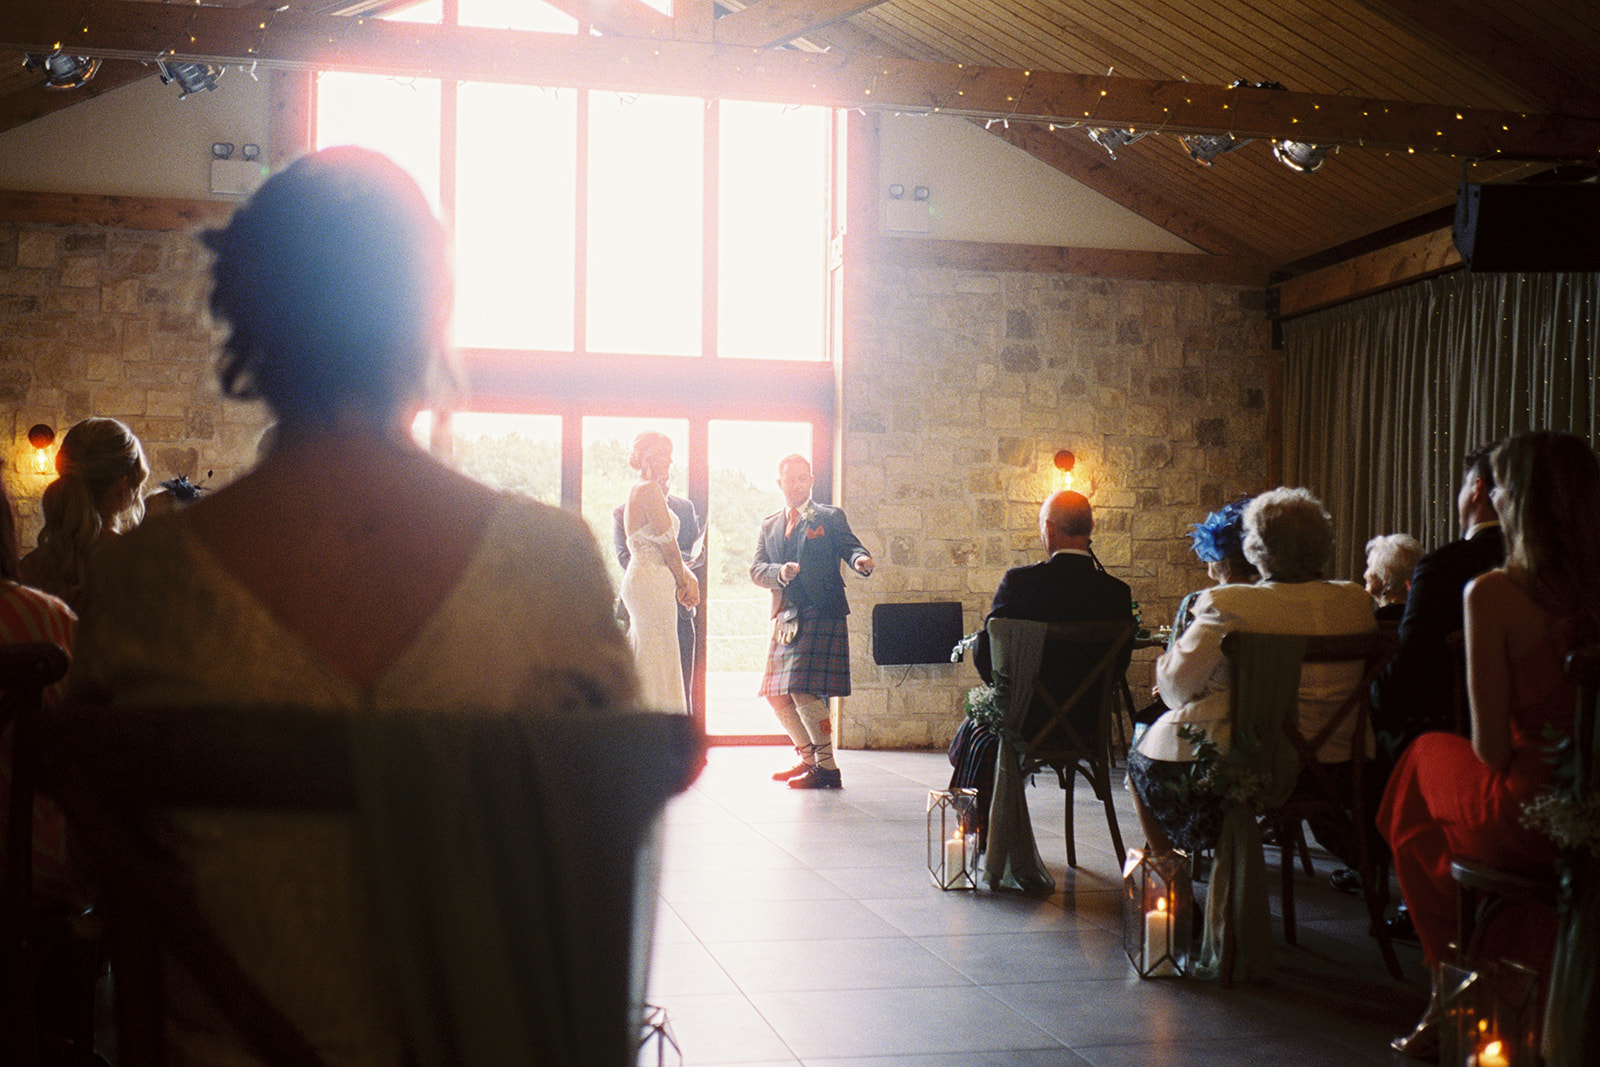 UK WEDDING PHOTOGRAPHER FILM 35MM ANALOGUE SCOTLAND